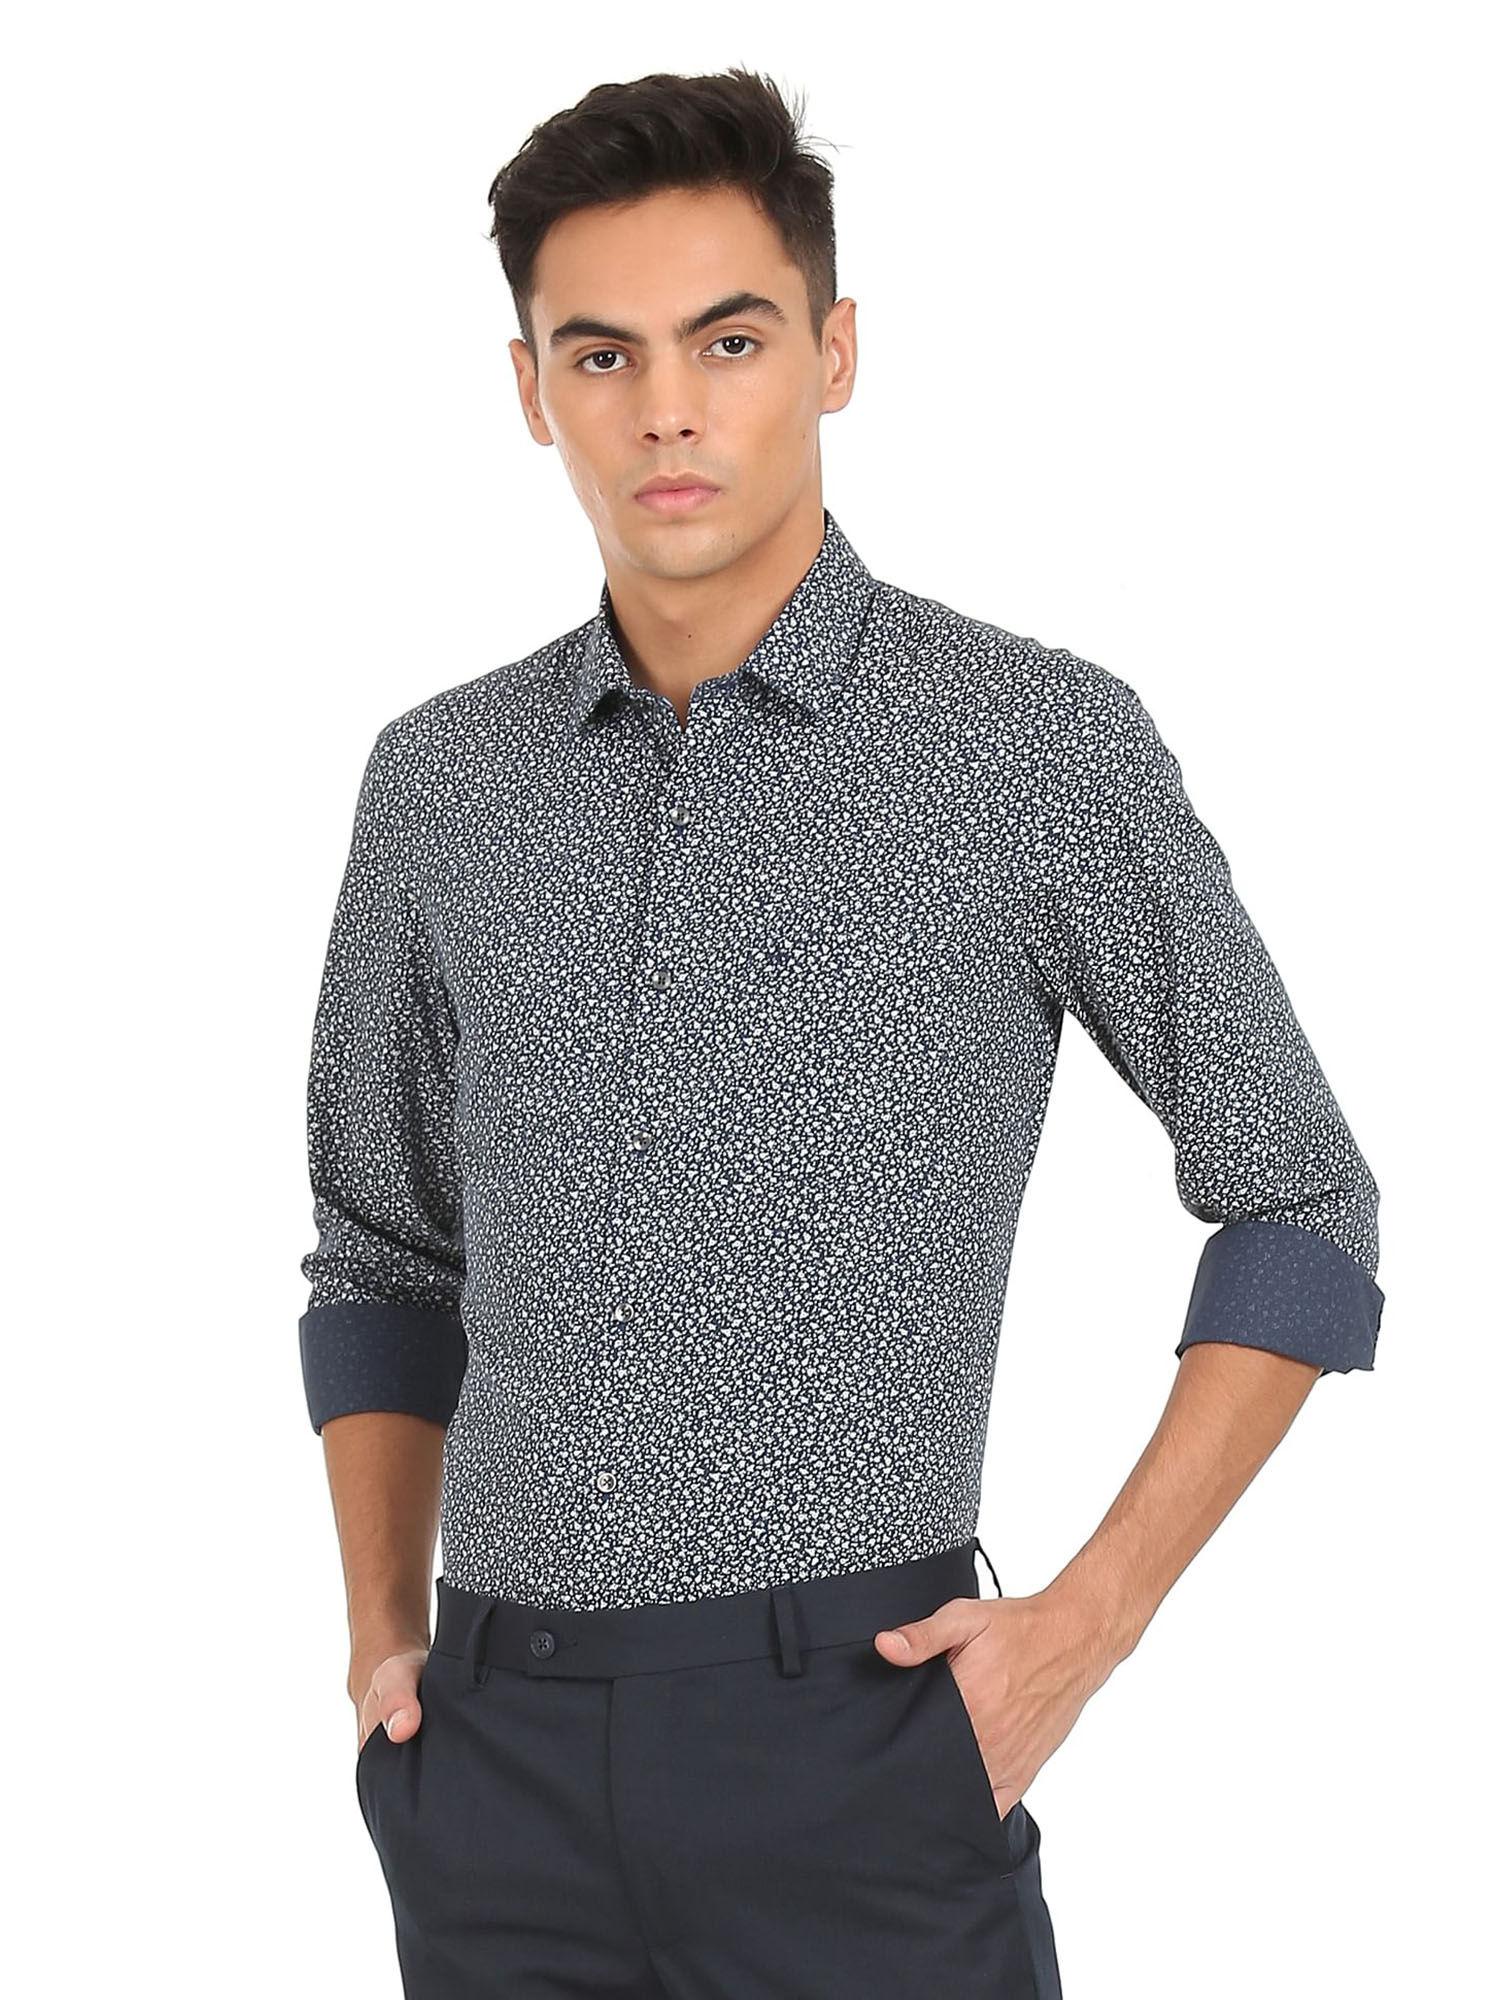 men-dark-blue-and-white-printed-formal-shirt